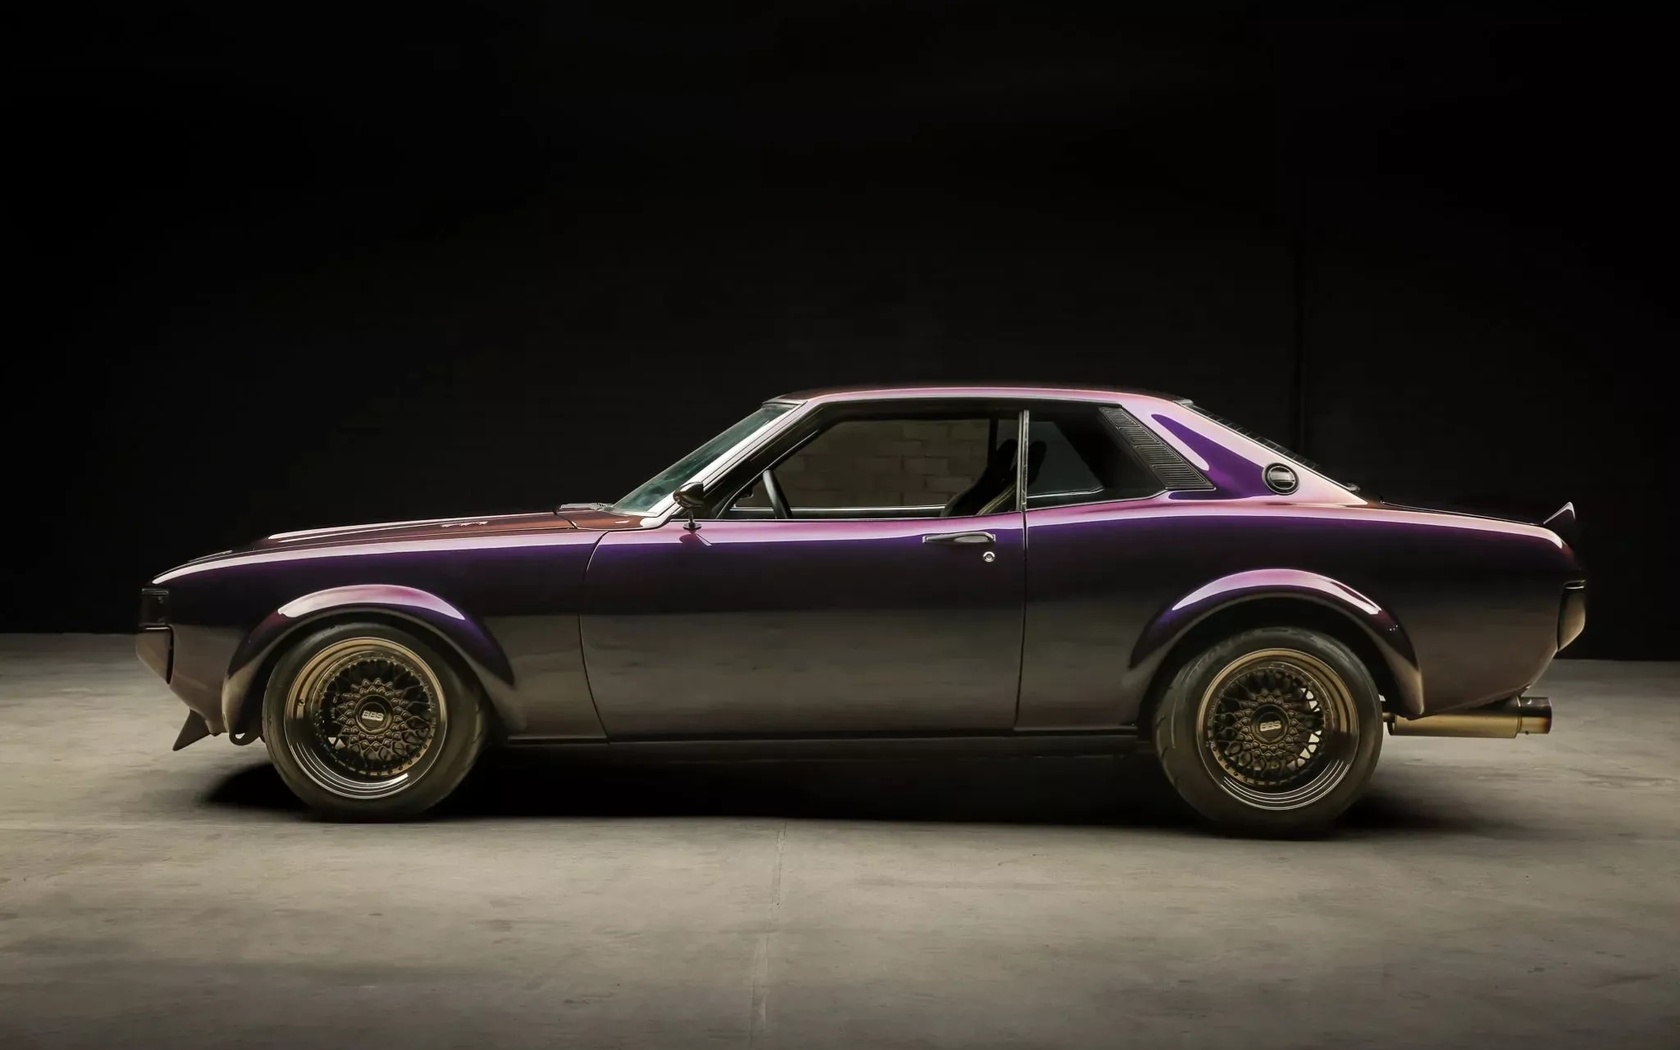 toyota, toyota celica, vehicle, powered 1977, classic car, purple cars